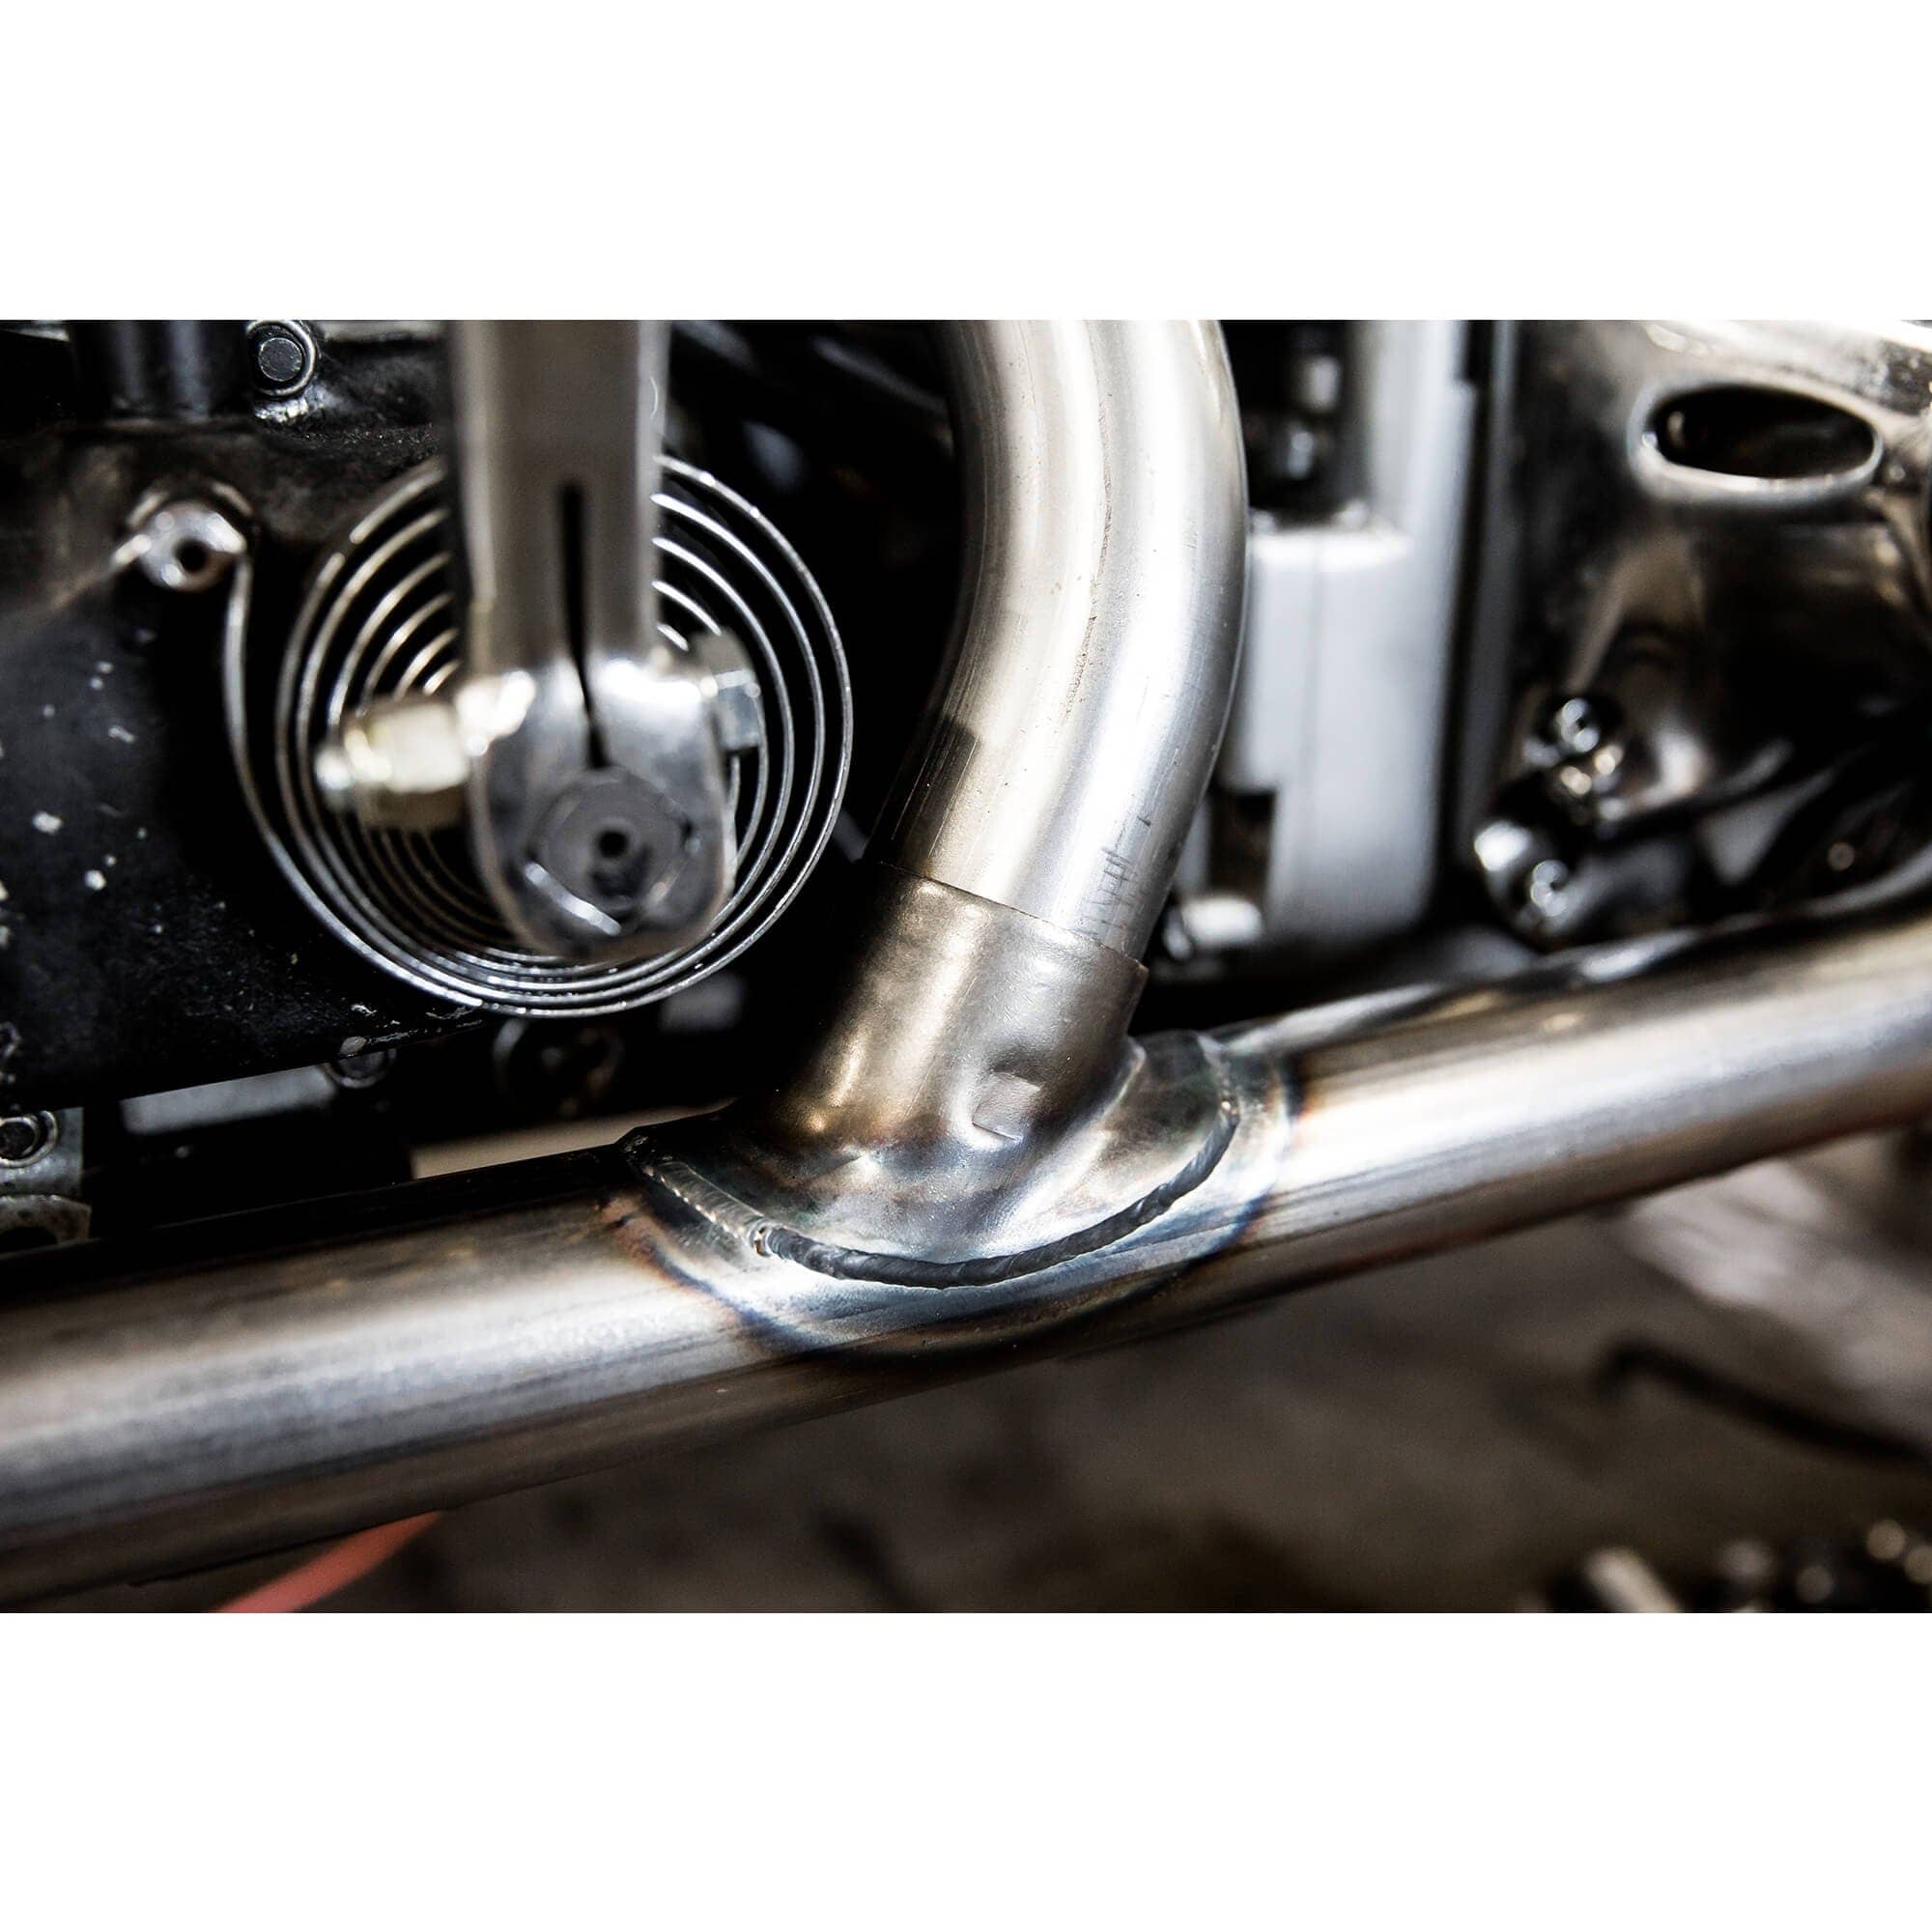 Gasbox Exhaust Pipe Set 2-into-1 1970-84 Harley Cone Shovelhead - Bare  Steel OEM # 65435-70 – Lowbrow Customs